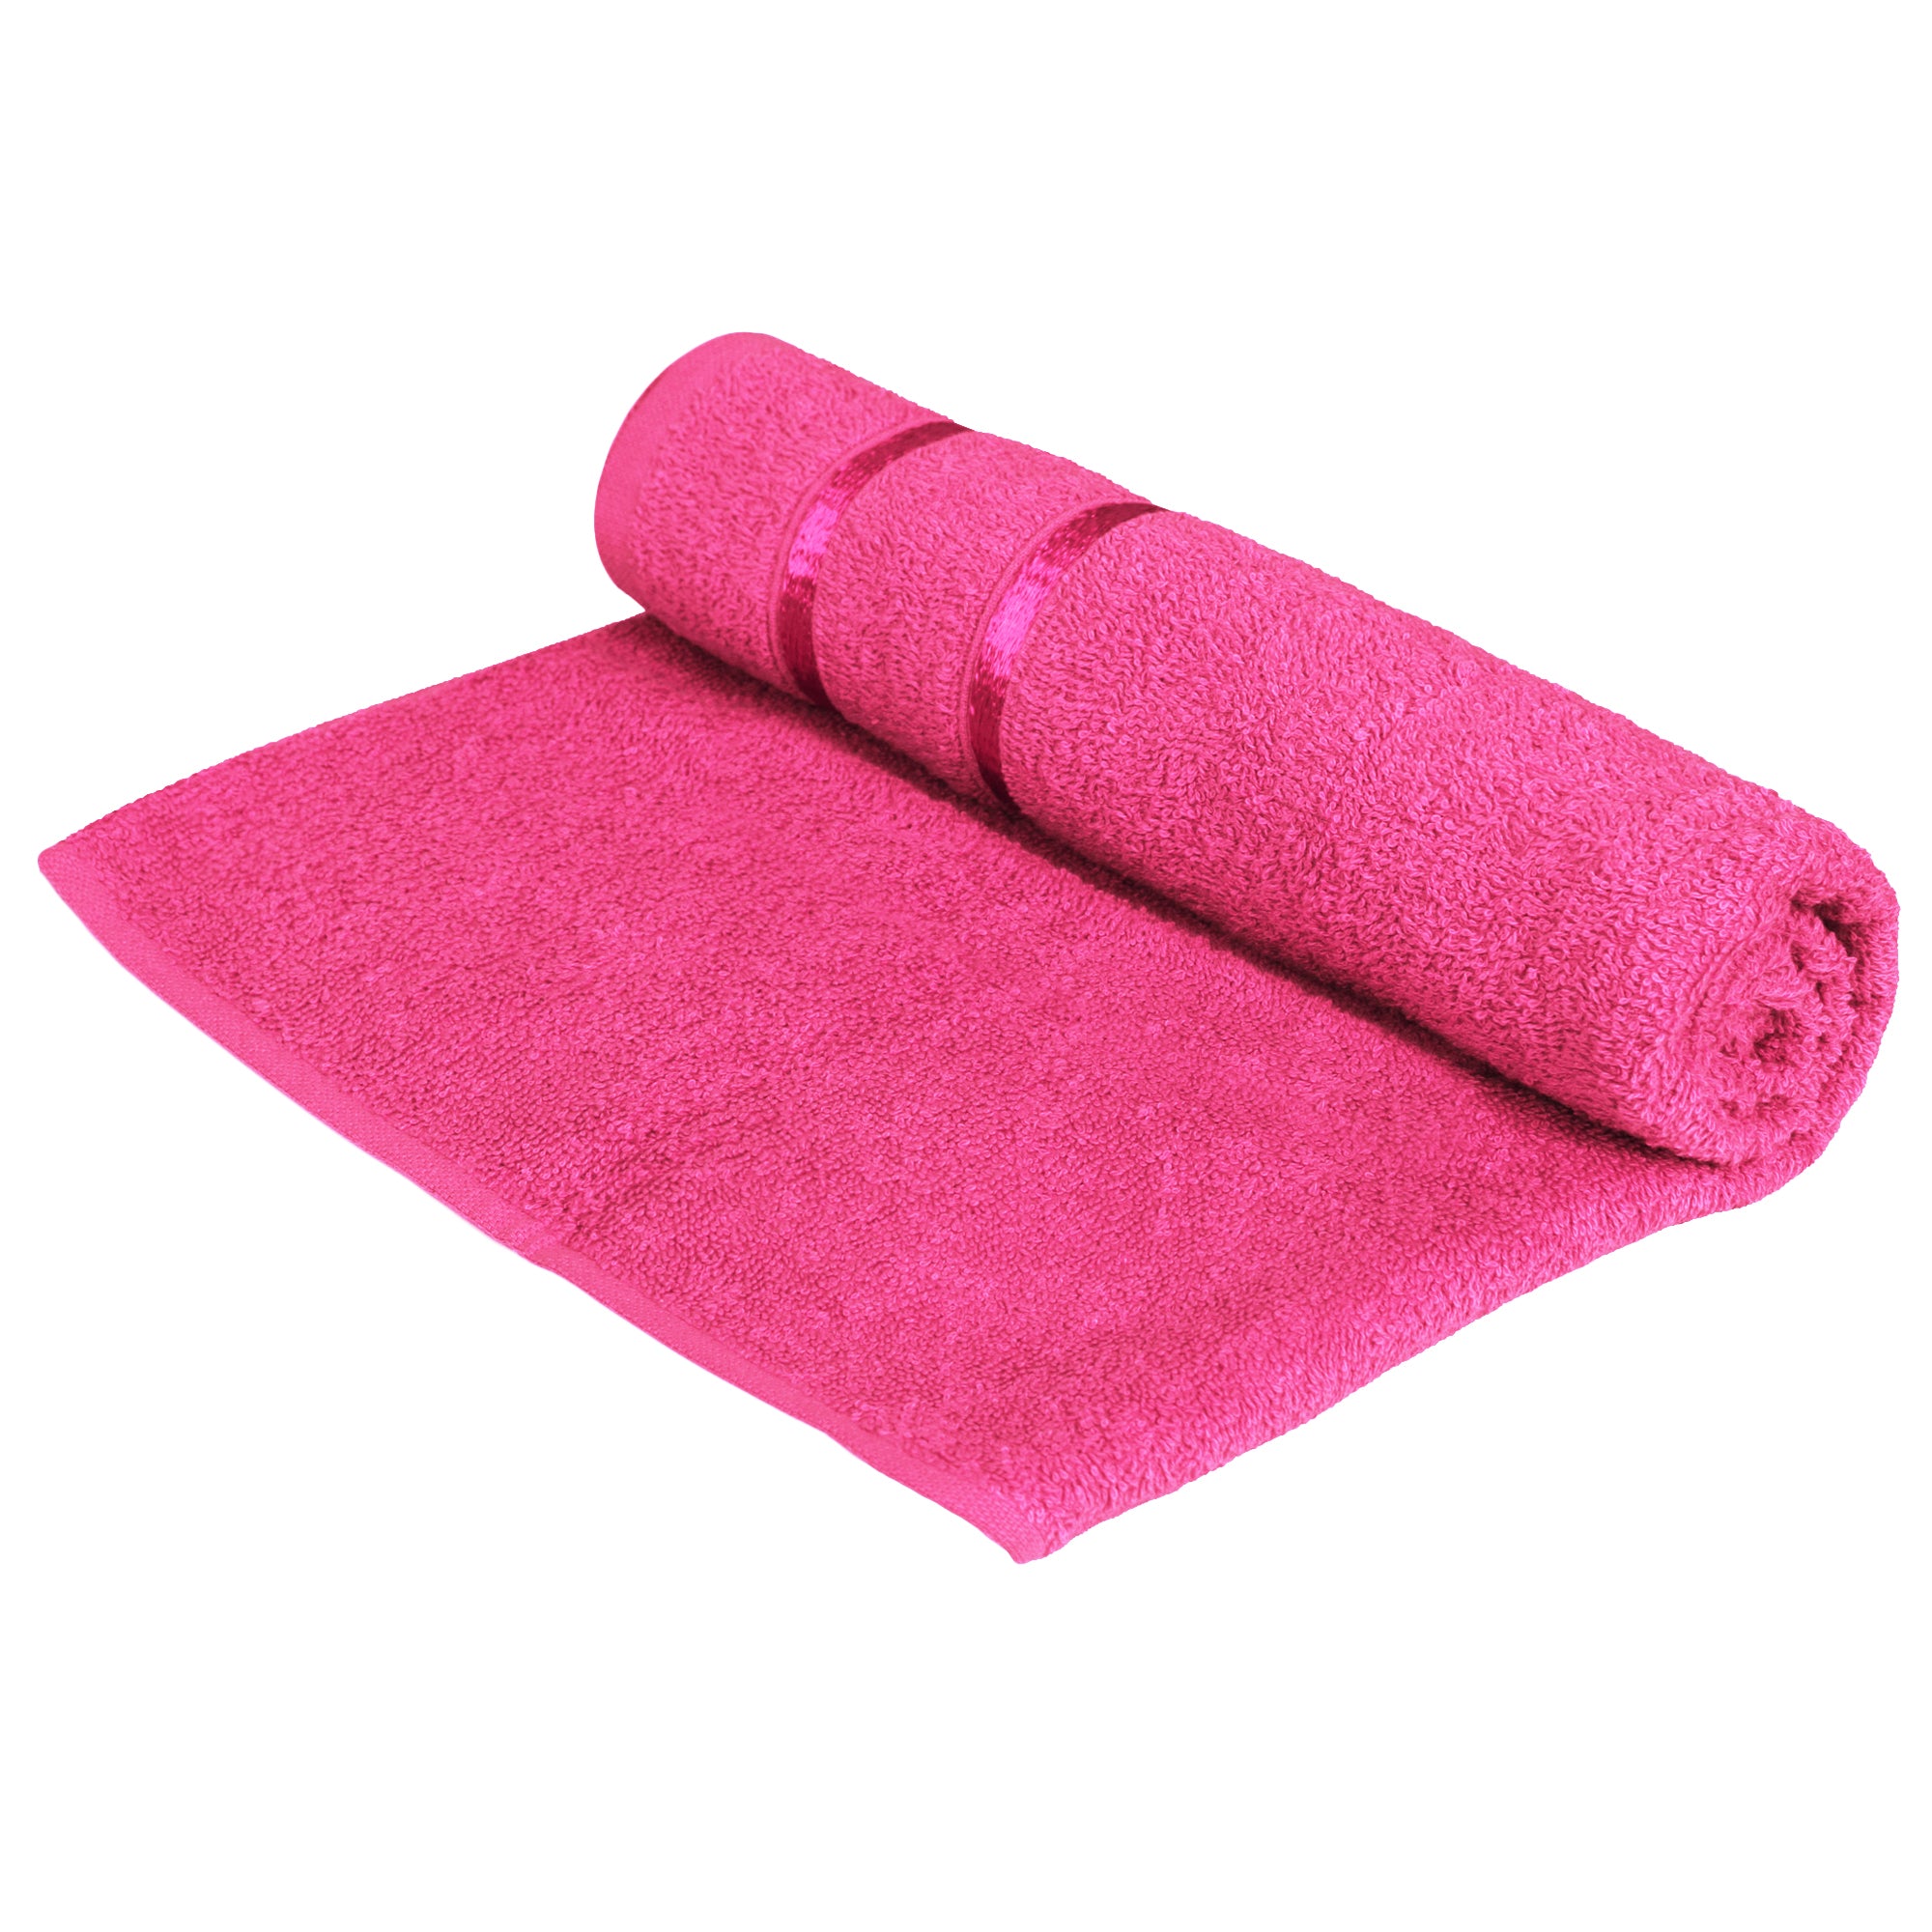 Story@Home 4 Units 100% Cotton Ladies Bath Towel - Pink